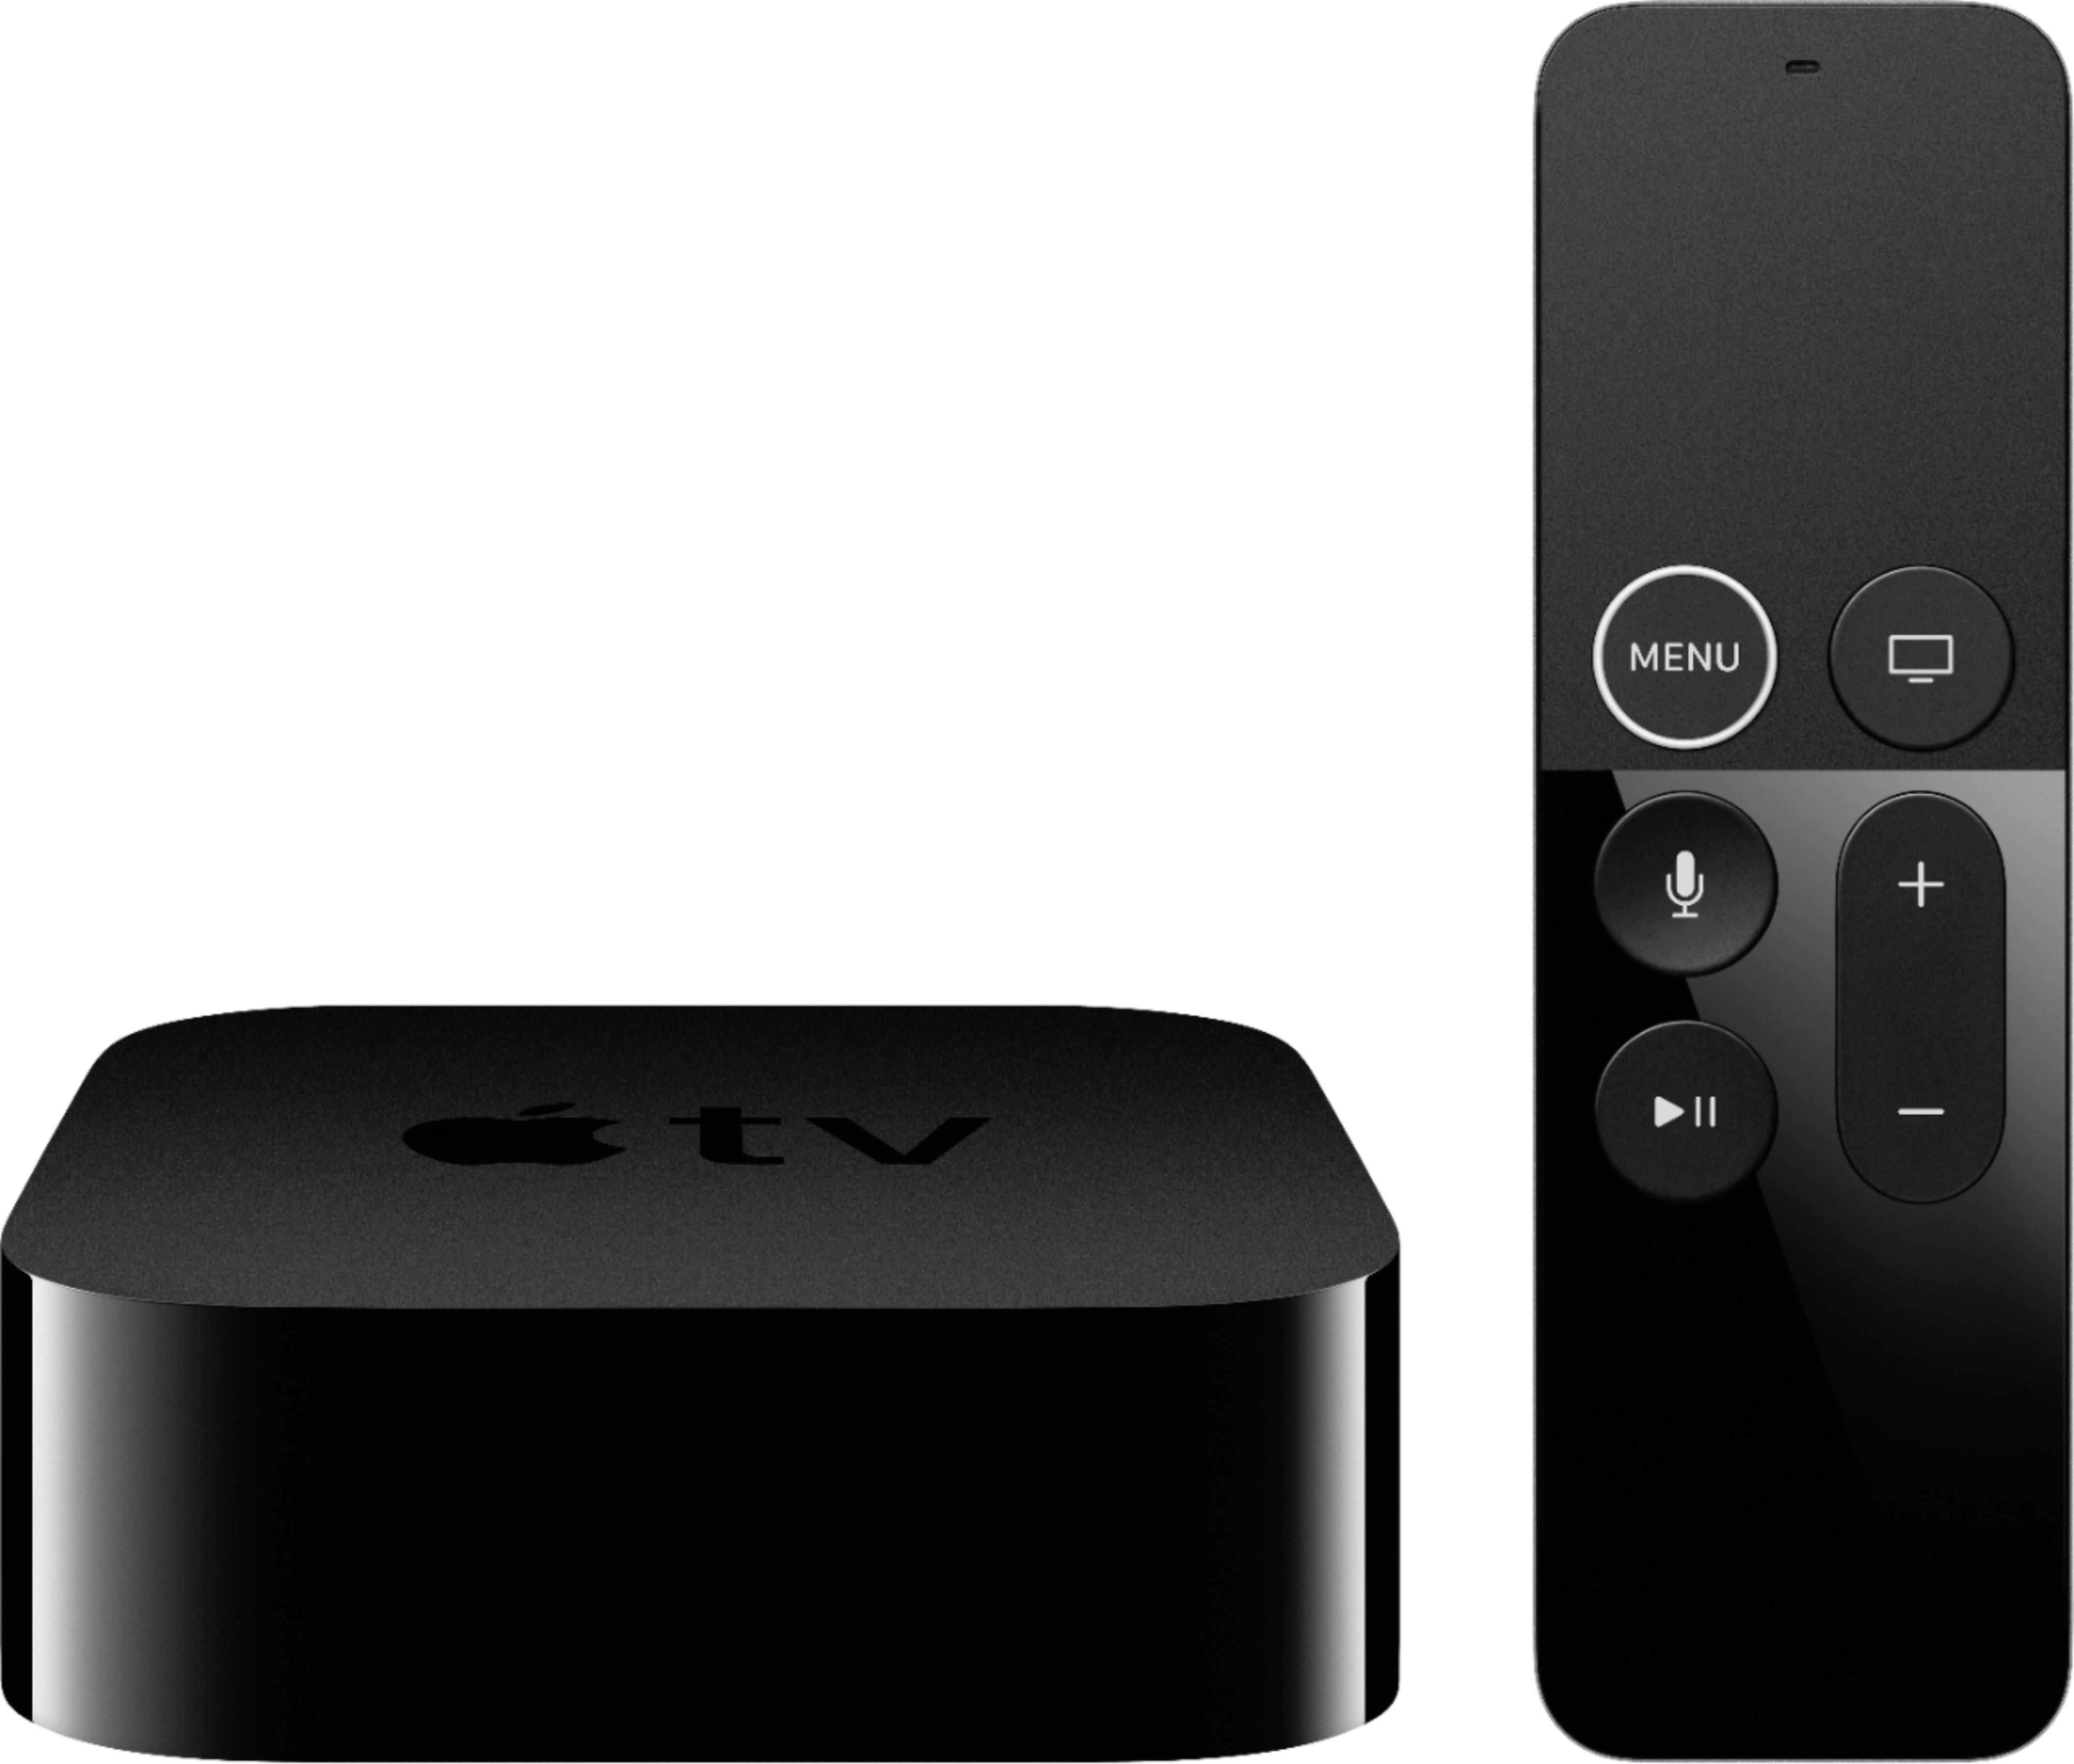 Apple TV 4K 32GB Black MQD22LL/A - Best Buy